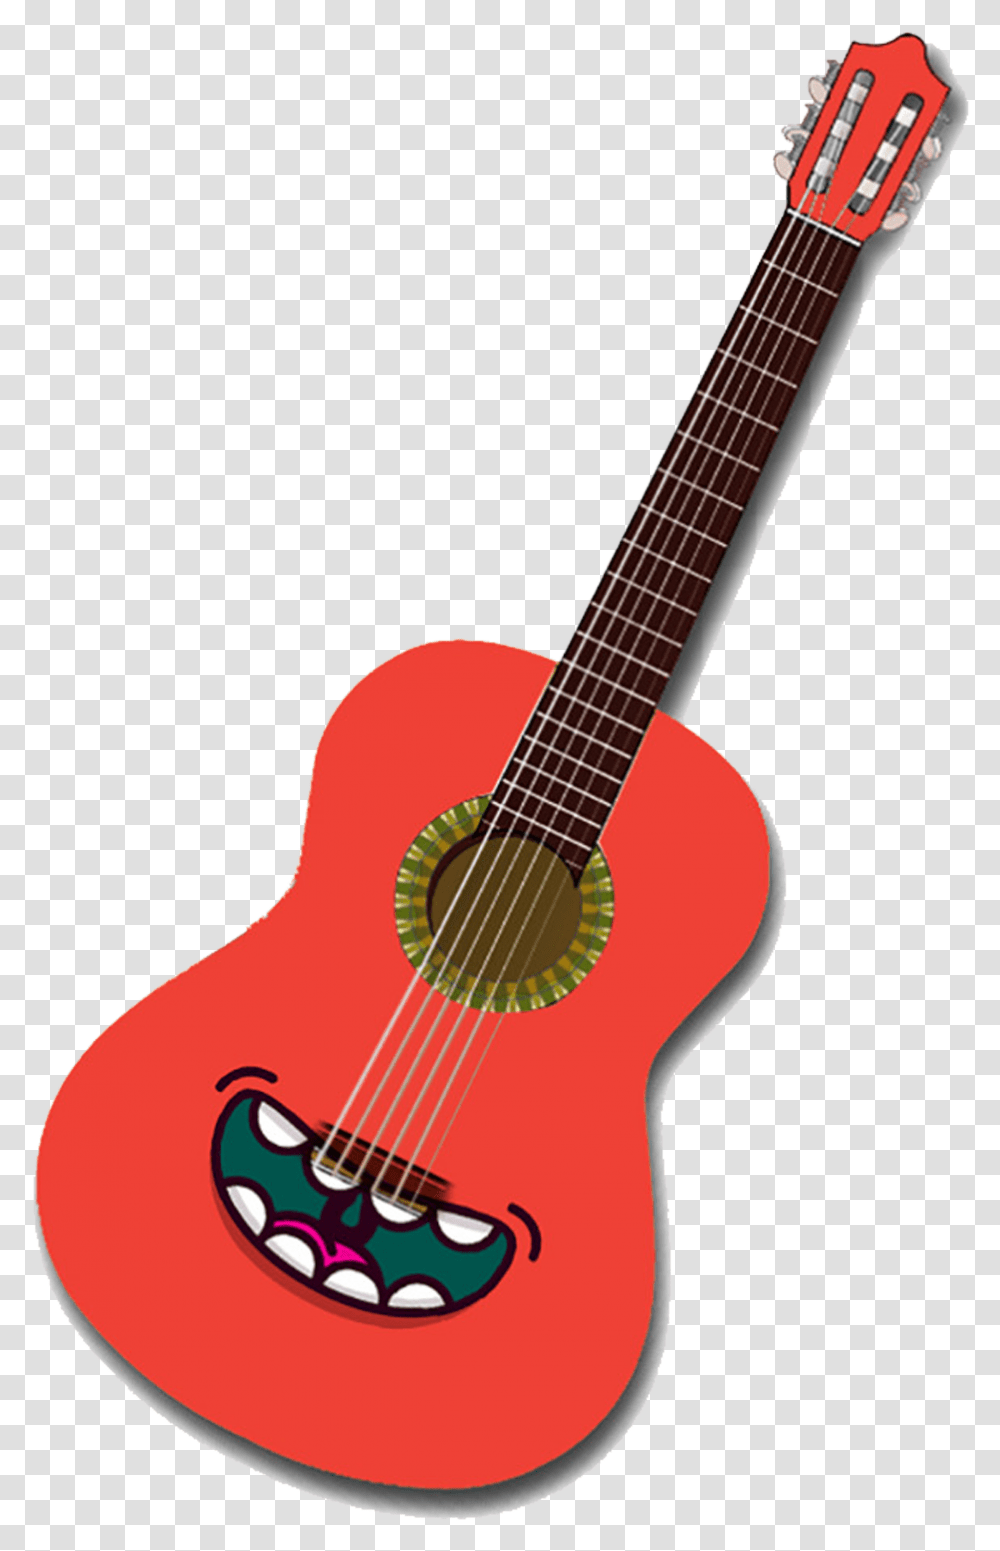 Clip Art Guitar Cartoon Images Background Guitar Cartoon, Leisure Activities, Musical Instrument, Bass Guitar, Electric Guitar Transparent Png